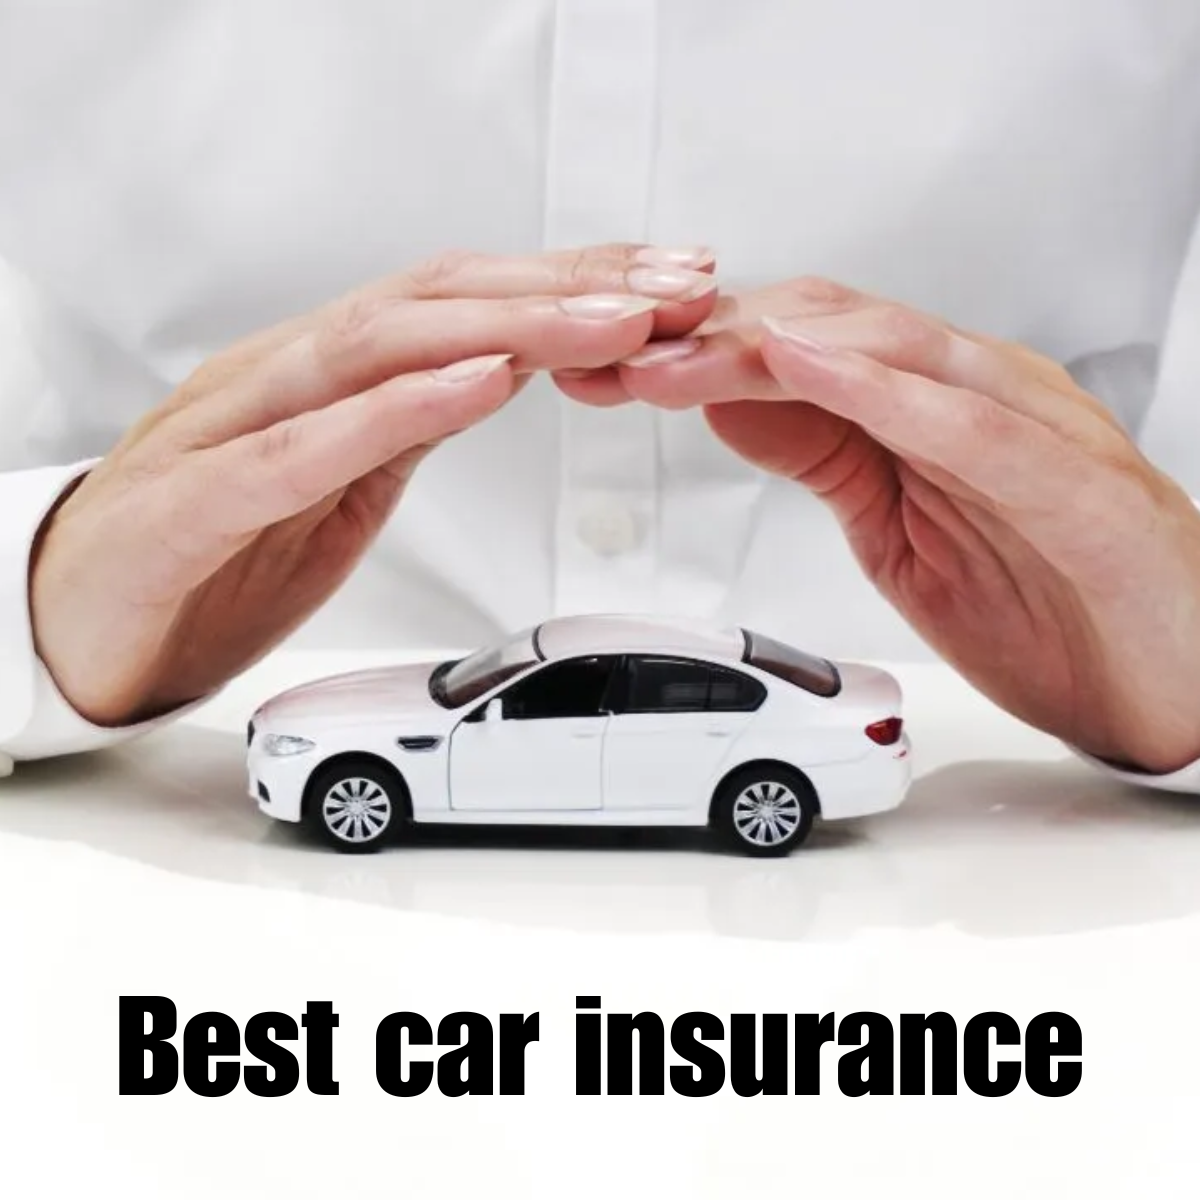 Best car insurance